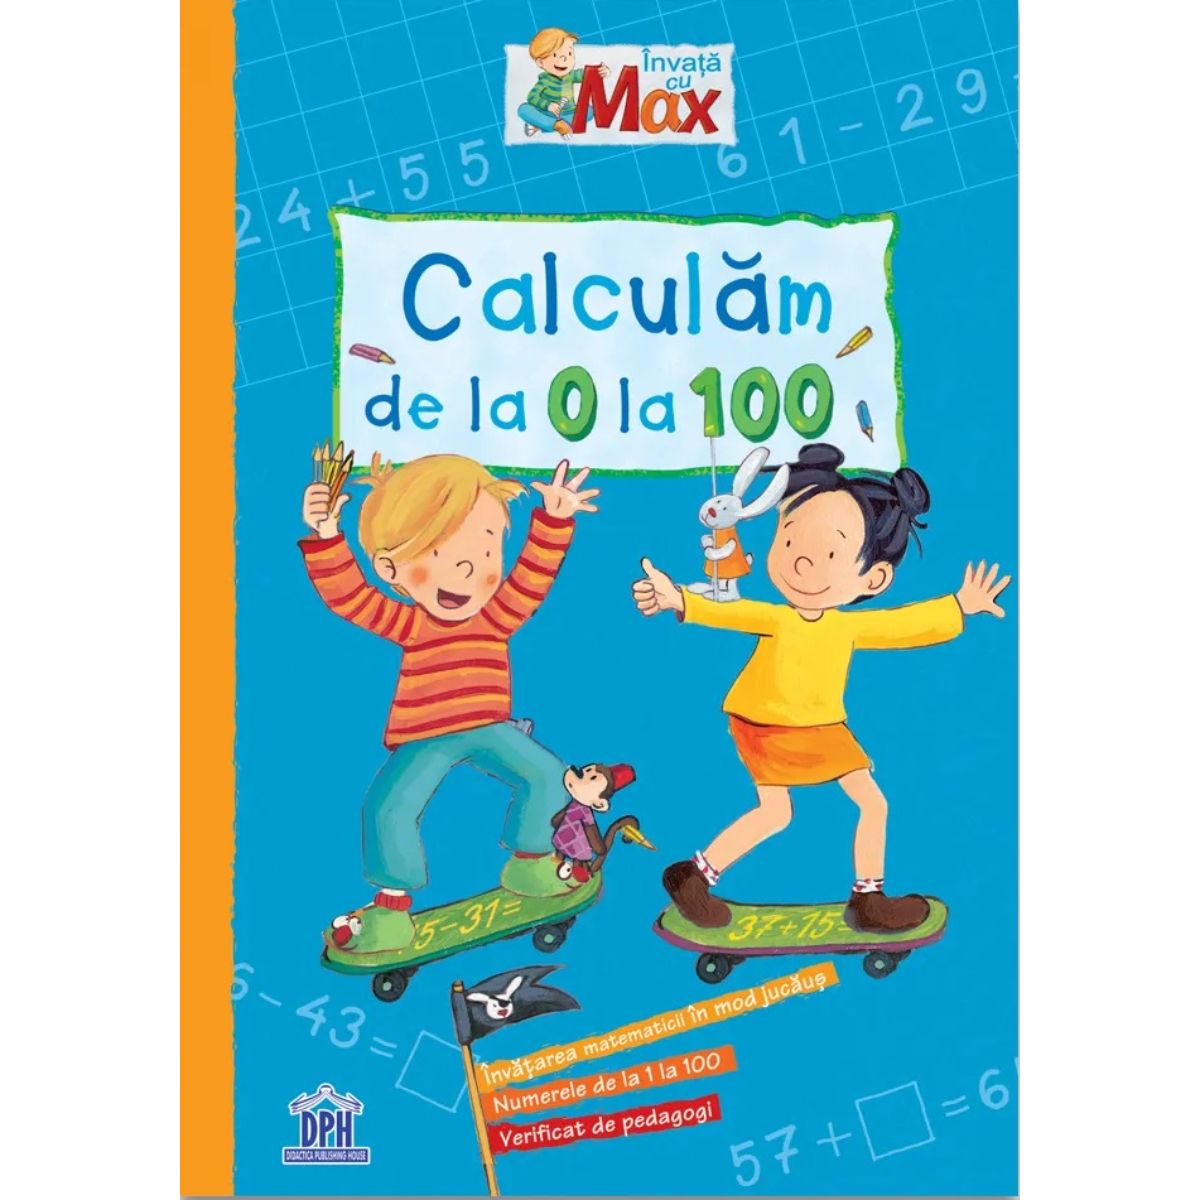 Invata cu Max, Calculam de la 0 la 100